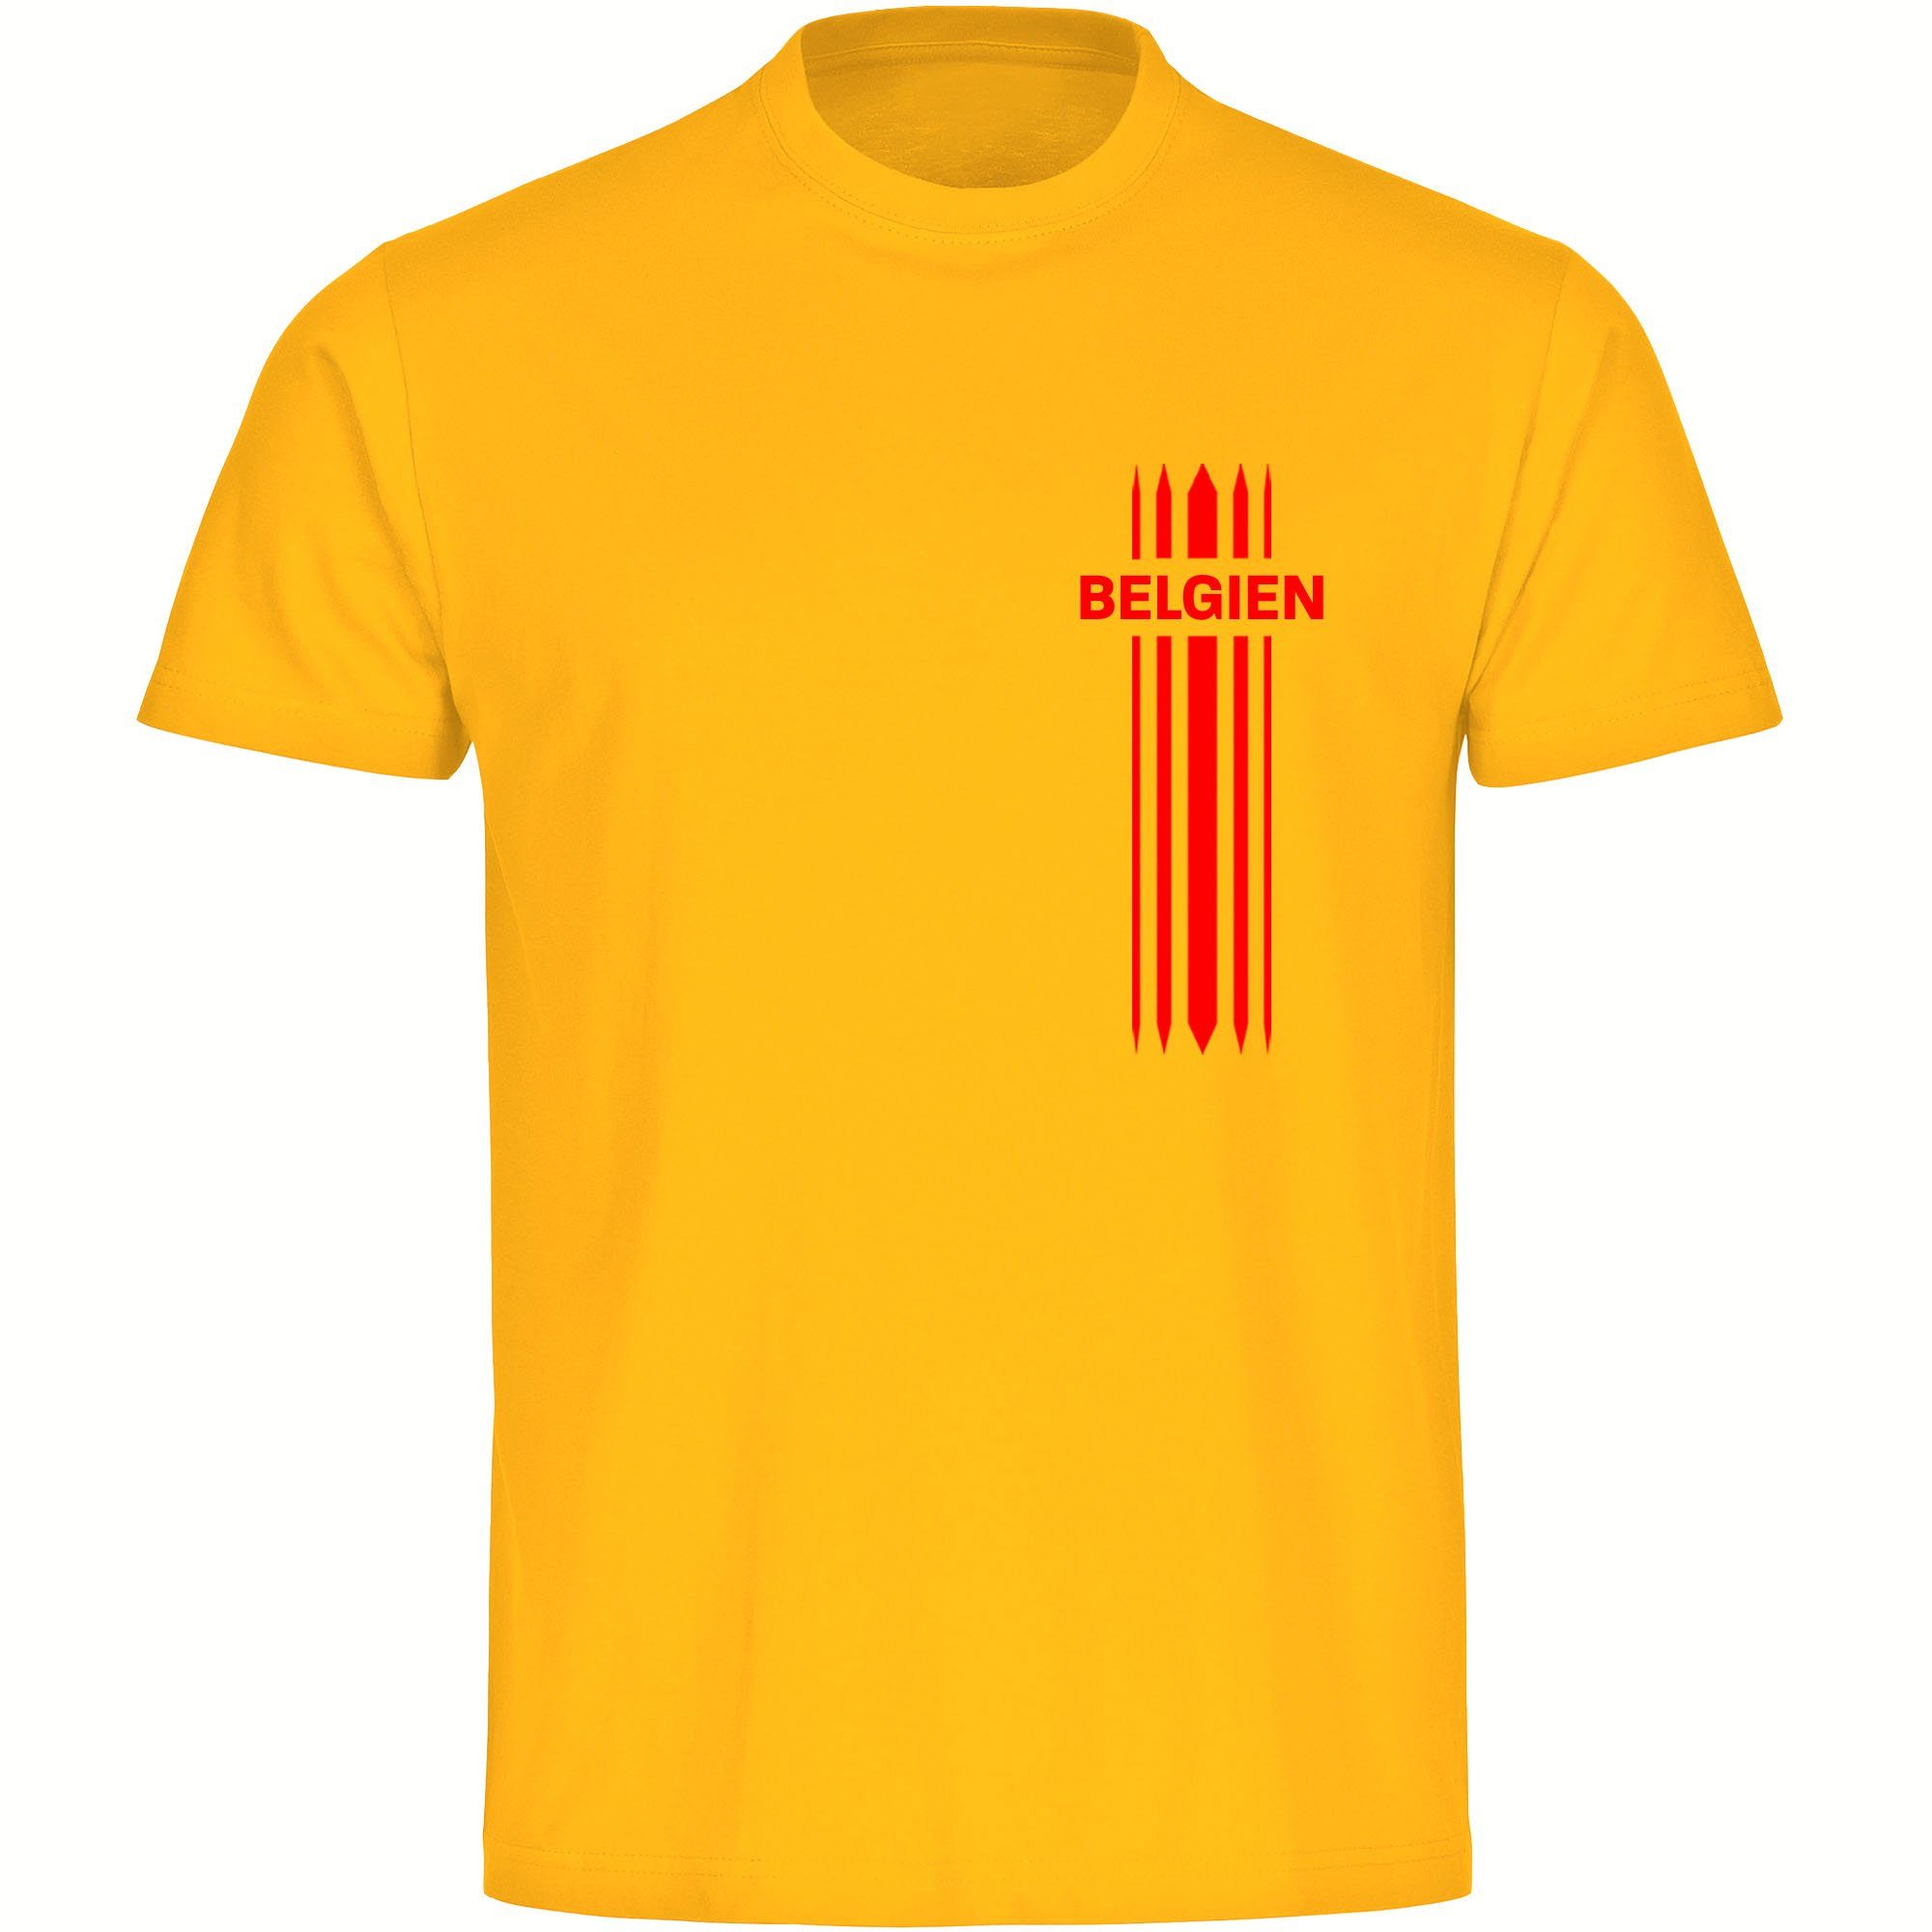 multifanshop T-Shirt Kinder Belgien - Streifen - Boy Girl